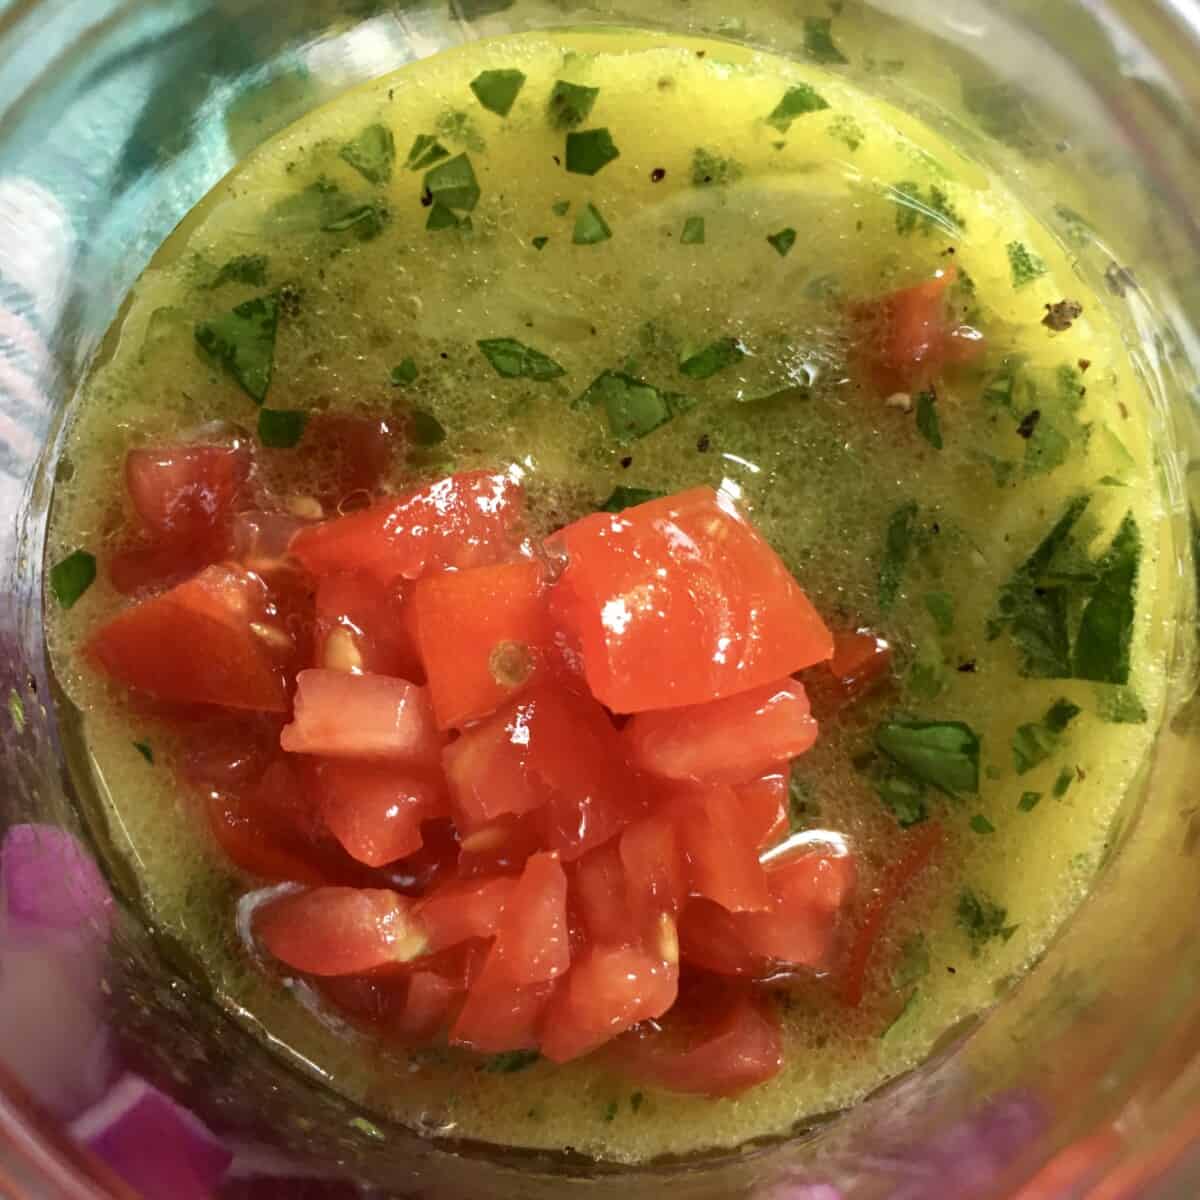 chopped tomatoes on top of lemony-parsley filled olive oil vinaigrette